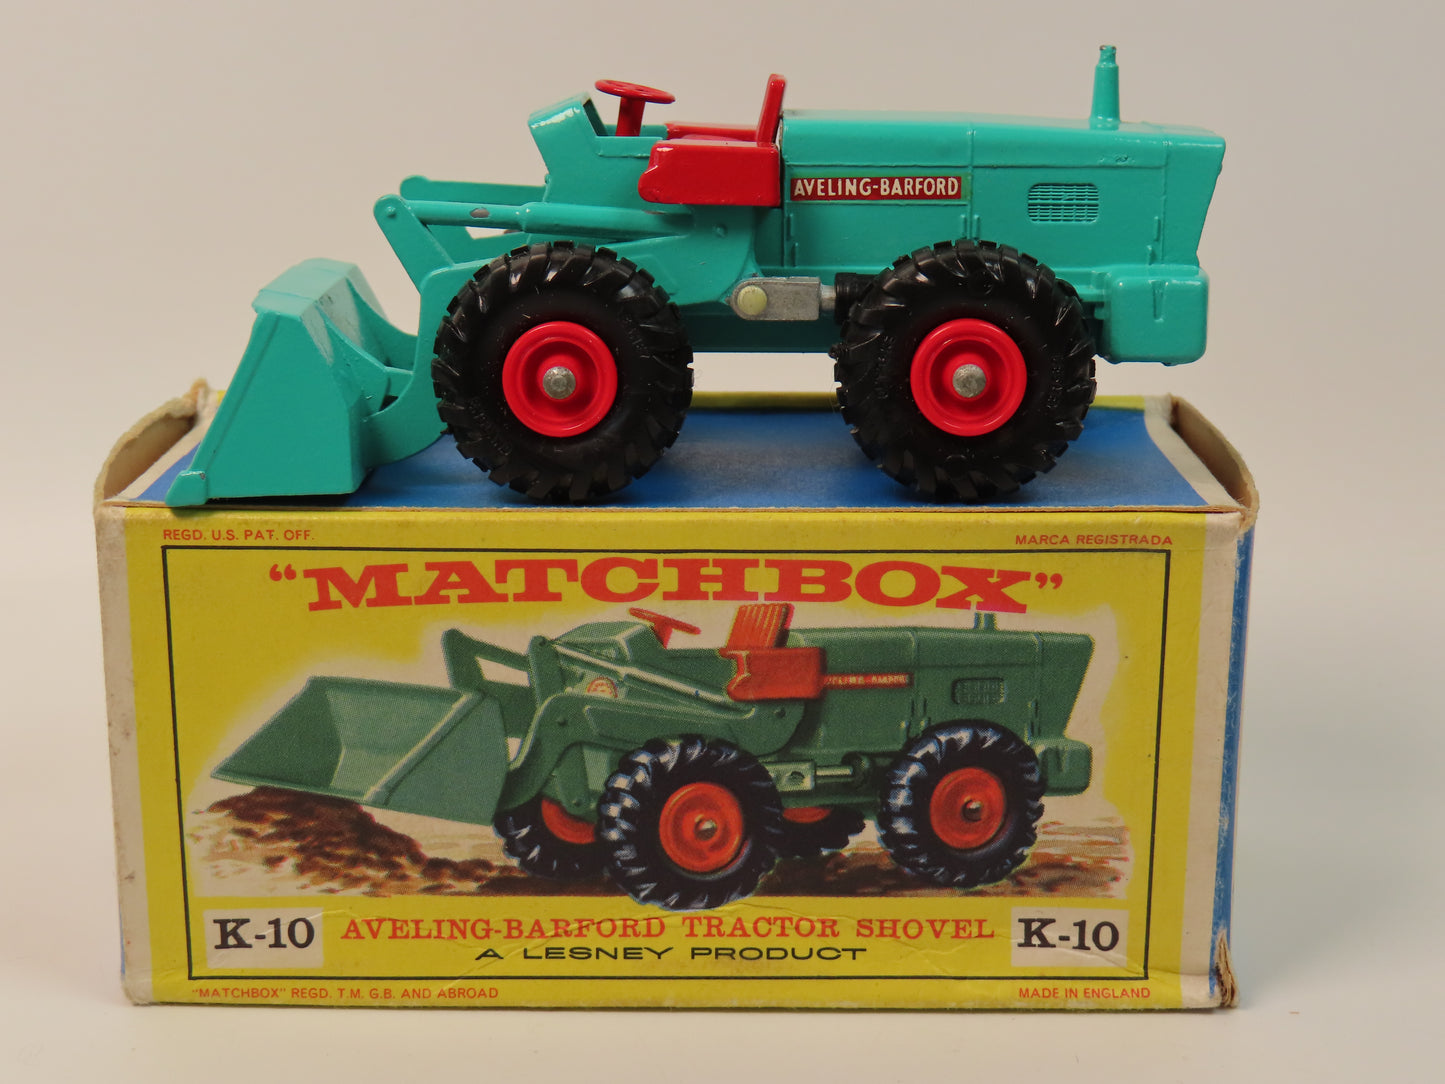 Matchbox King Size K-10 Aveling-Barford Tractor Shovel, Very Near Mint/Boxed!